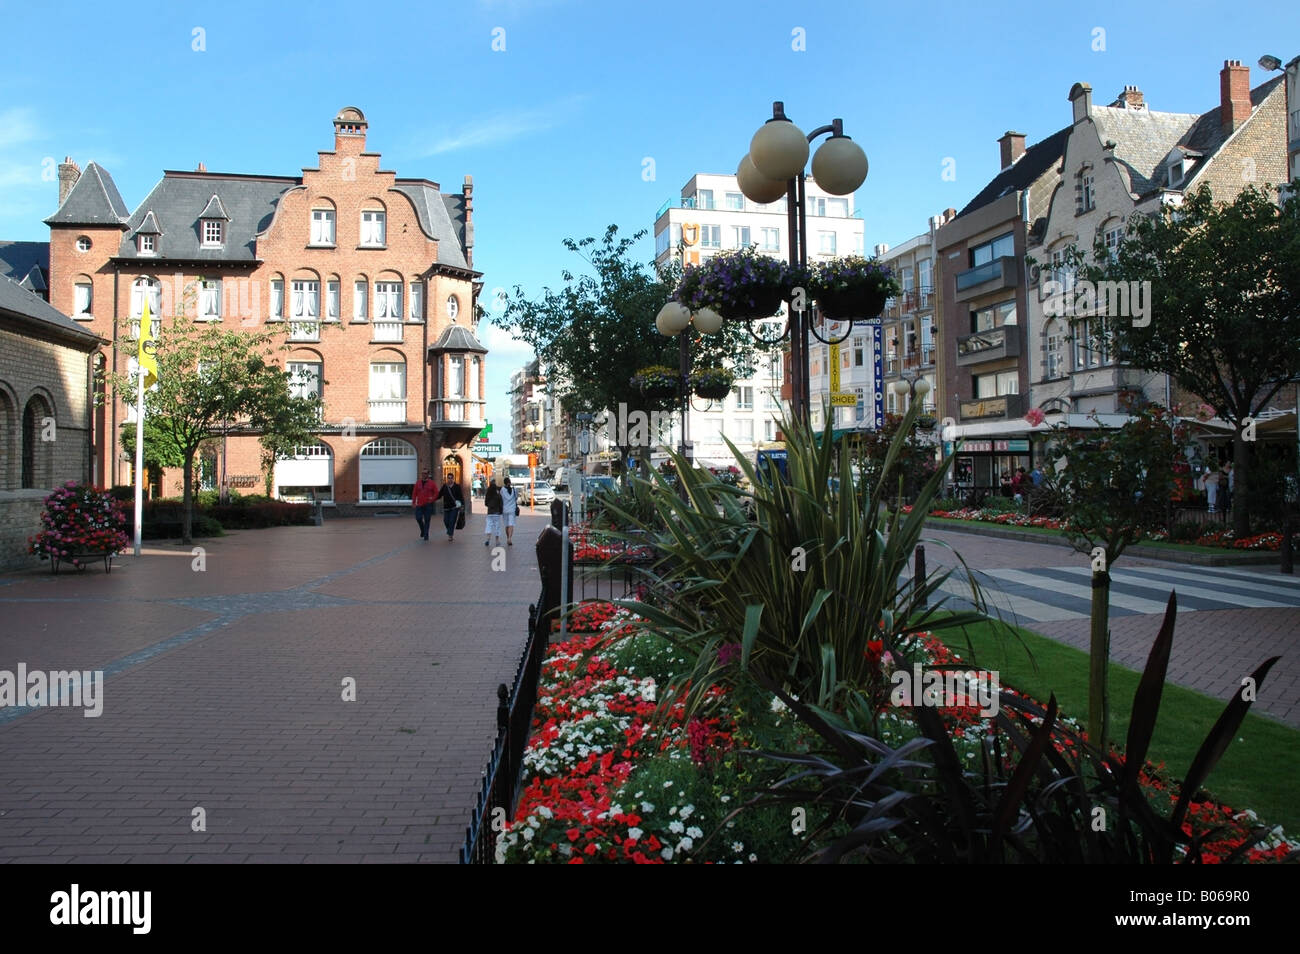 town centre of De Panne Belgium Europe Stock Photo - Alamy